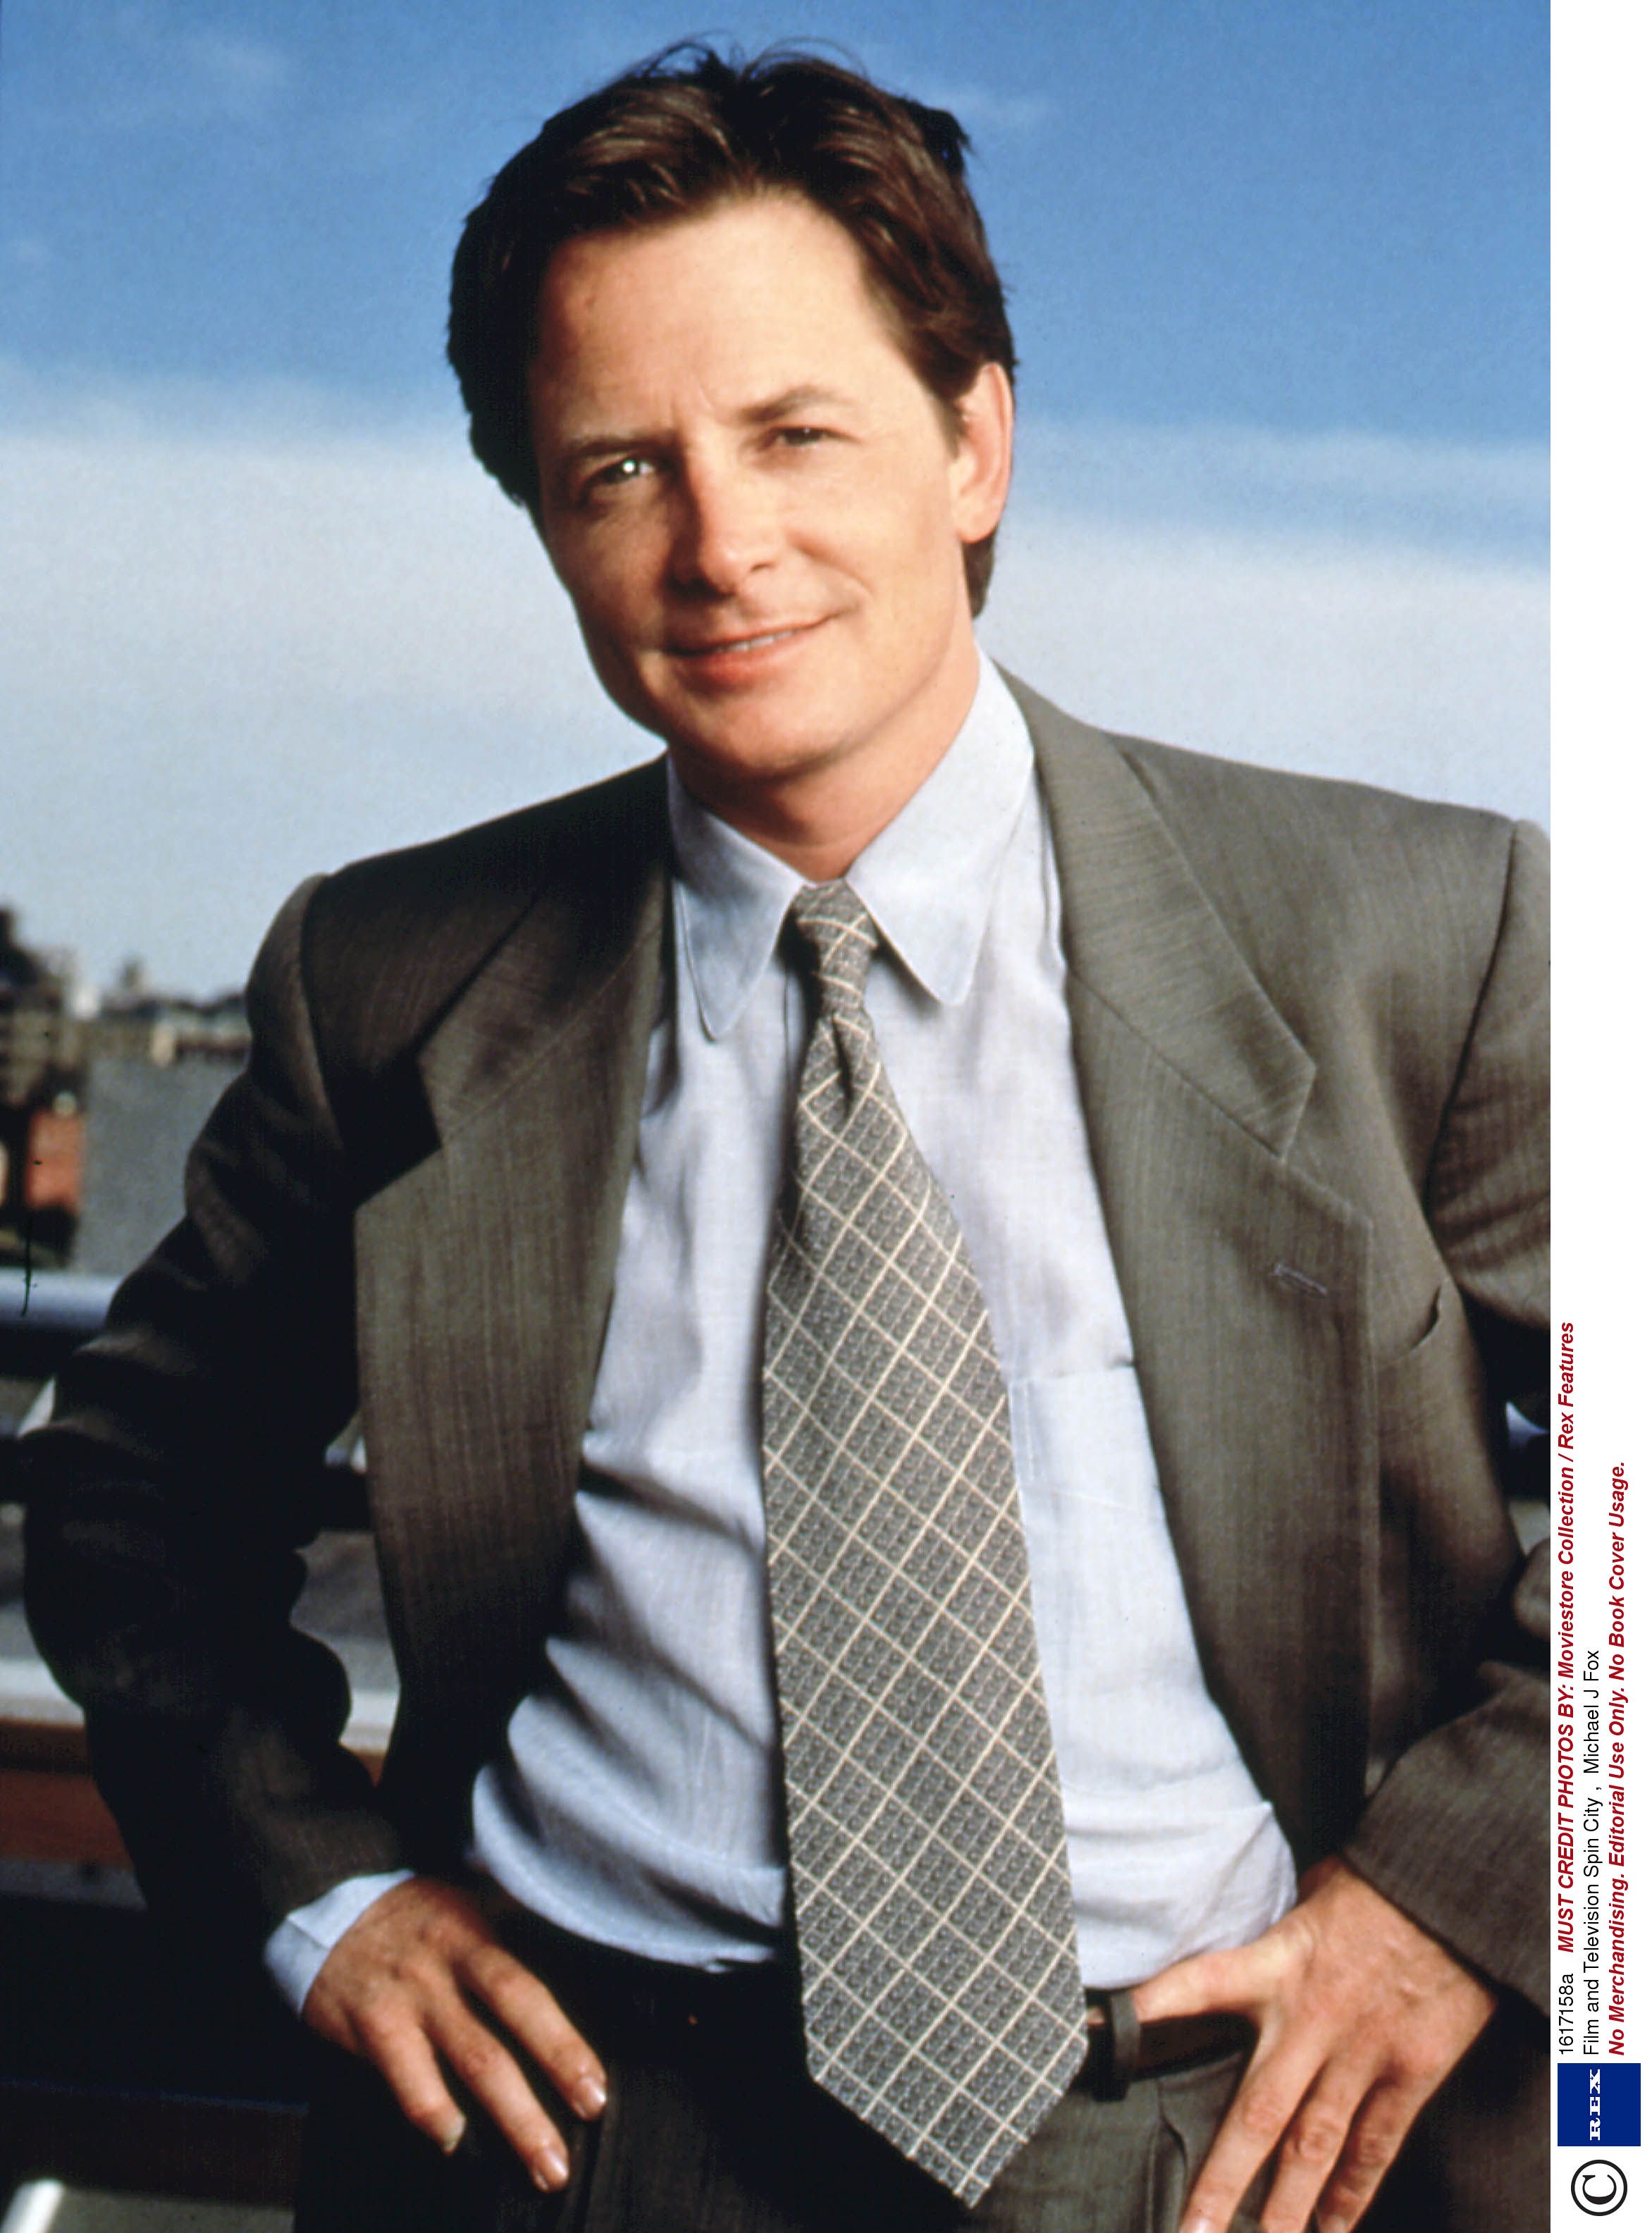 Michael J Fox on late 'Spin City' writer